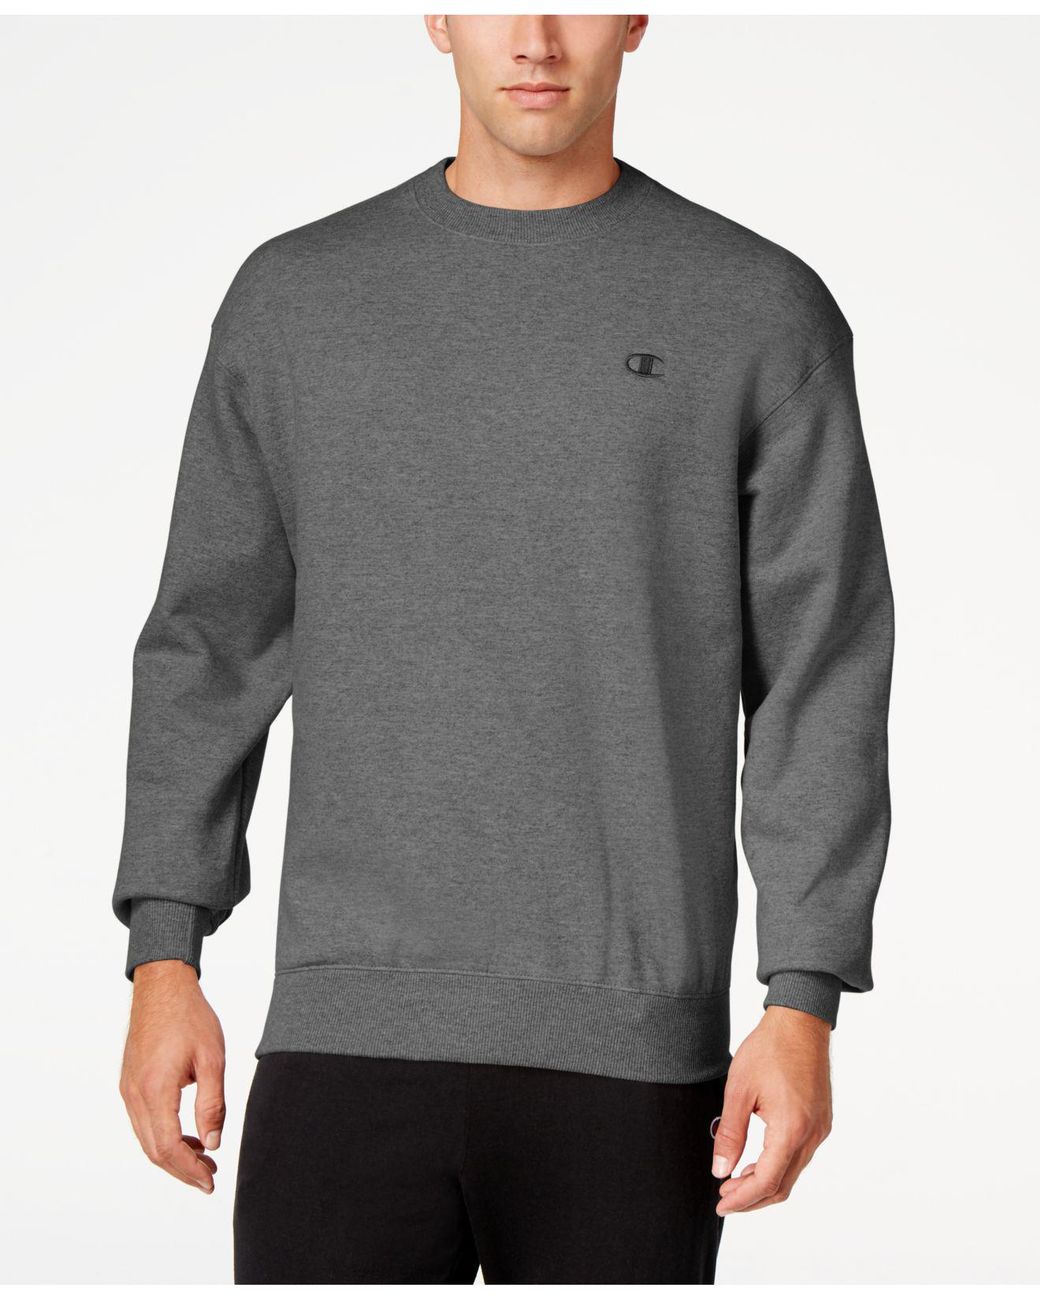 granite heather champion sweatshirt